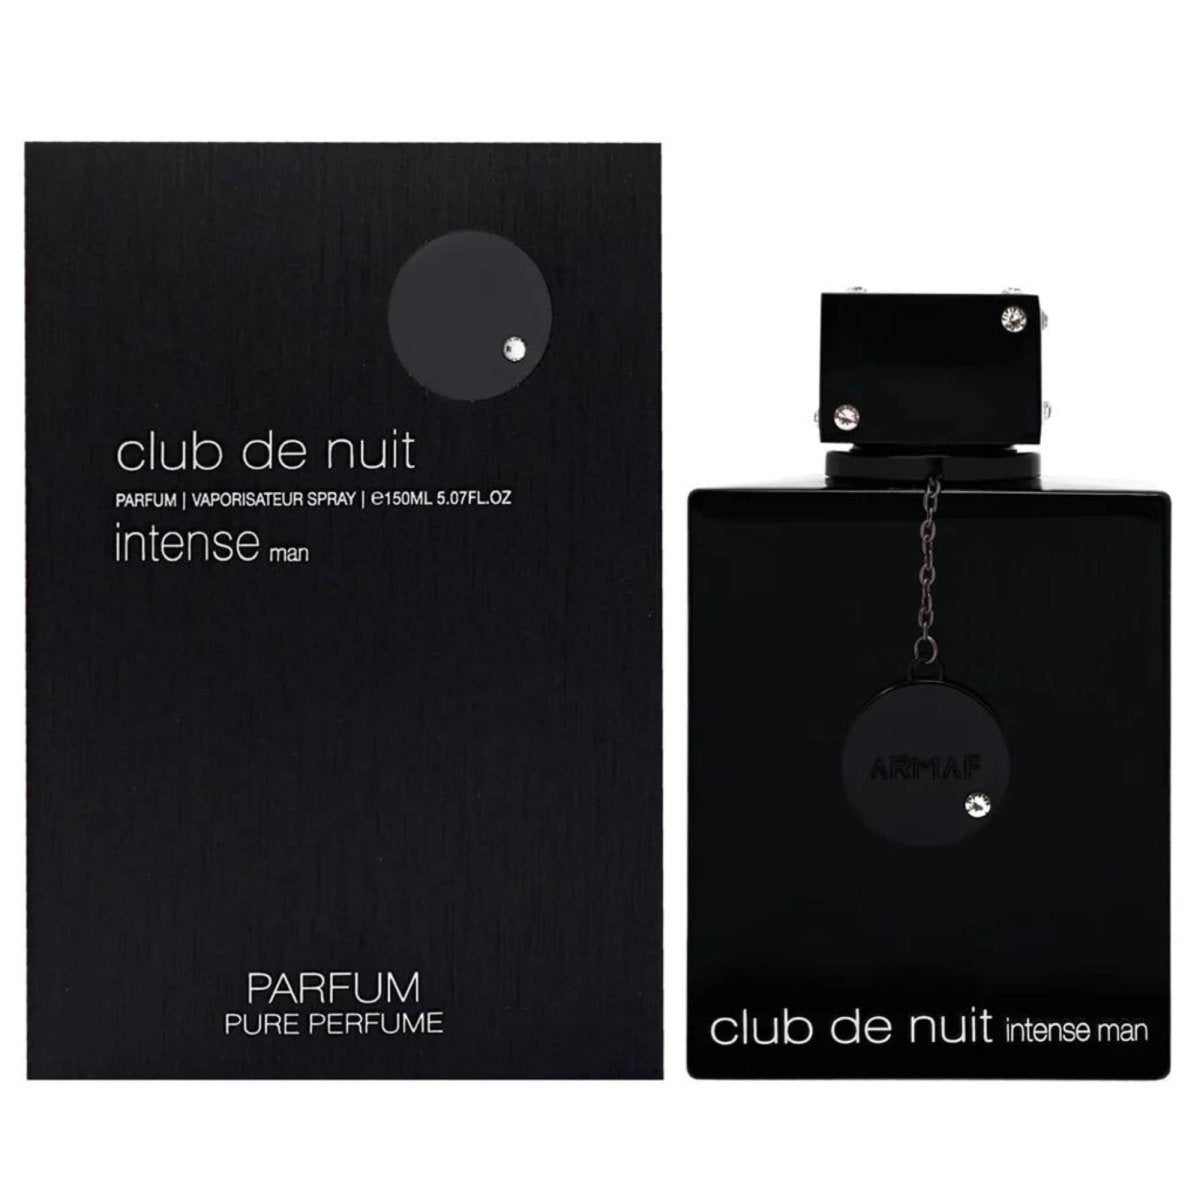 Armaf Club De Nuit Intense Eau De Toilette Spray 105ML - Perfume Headquarters - Armaf - Fragrance